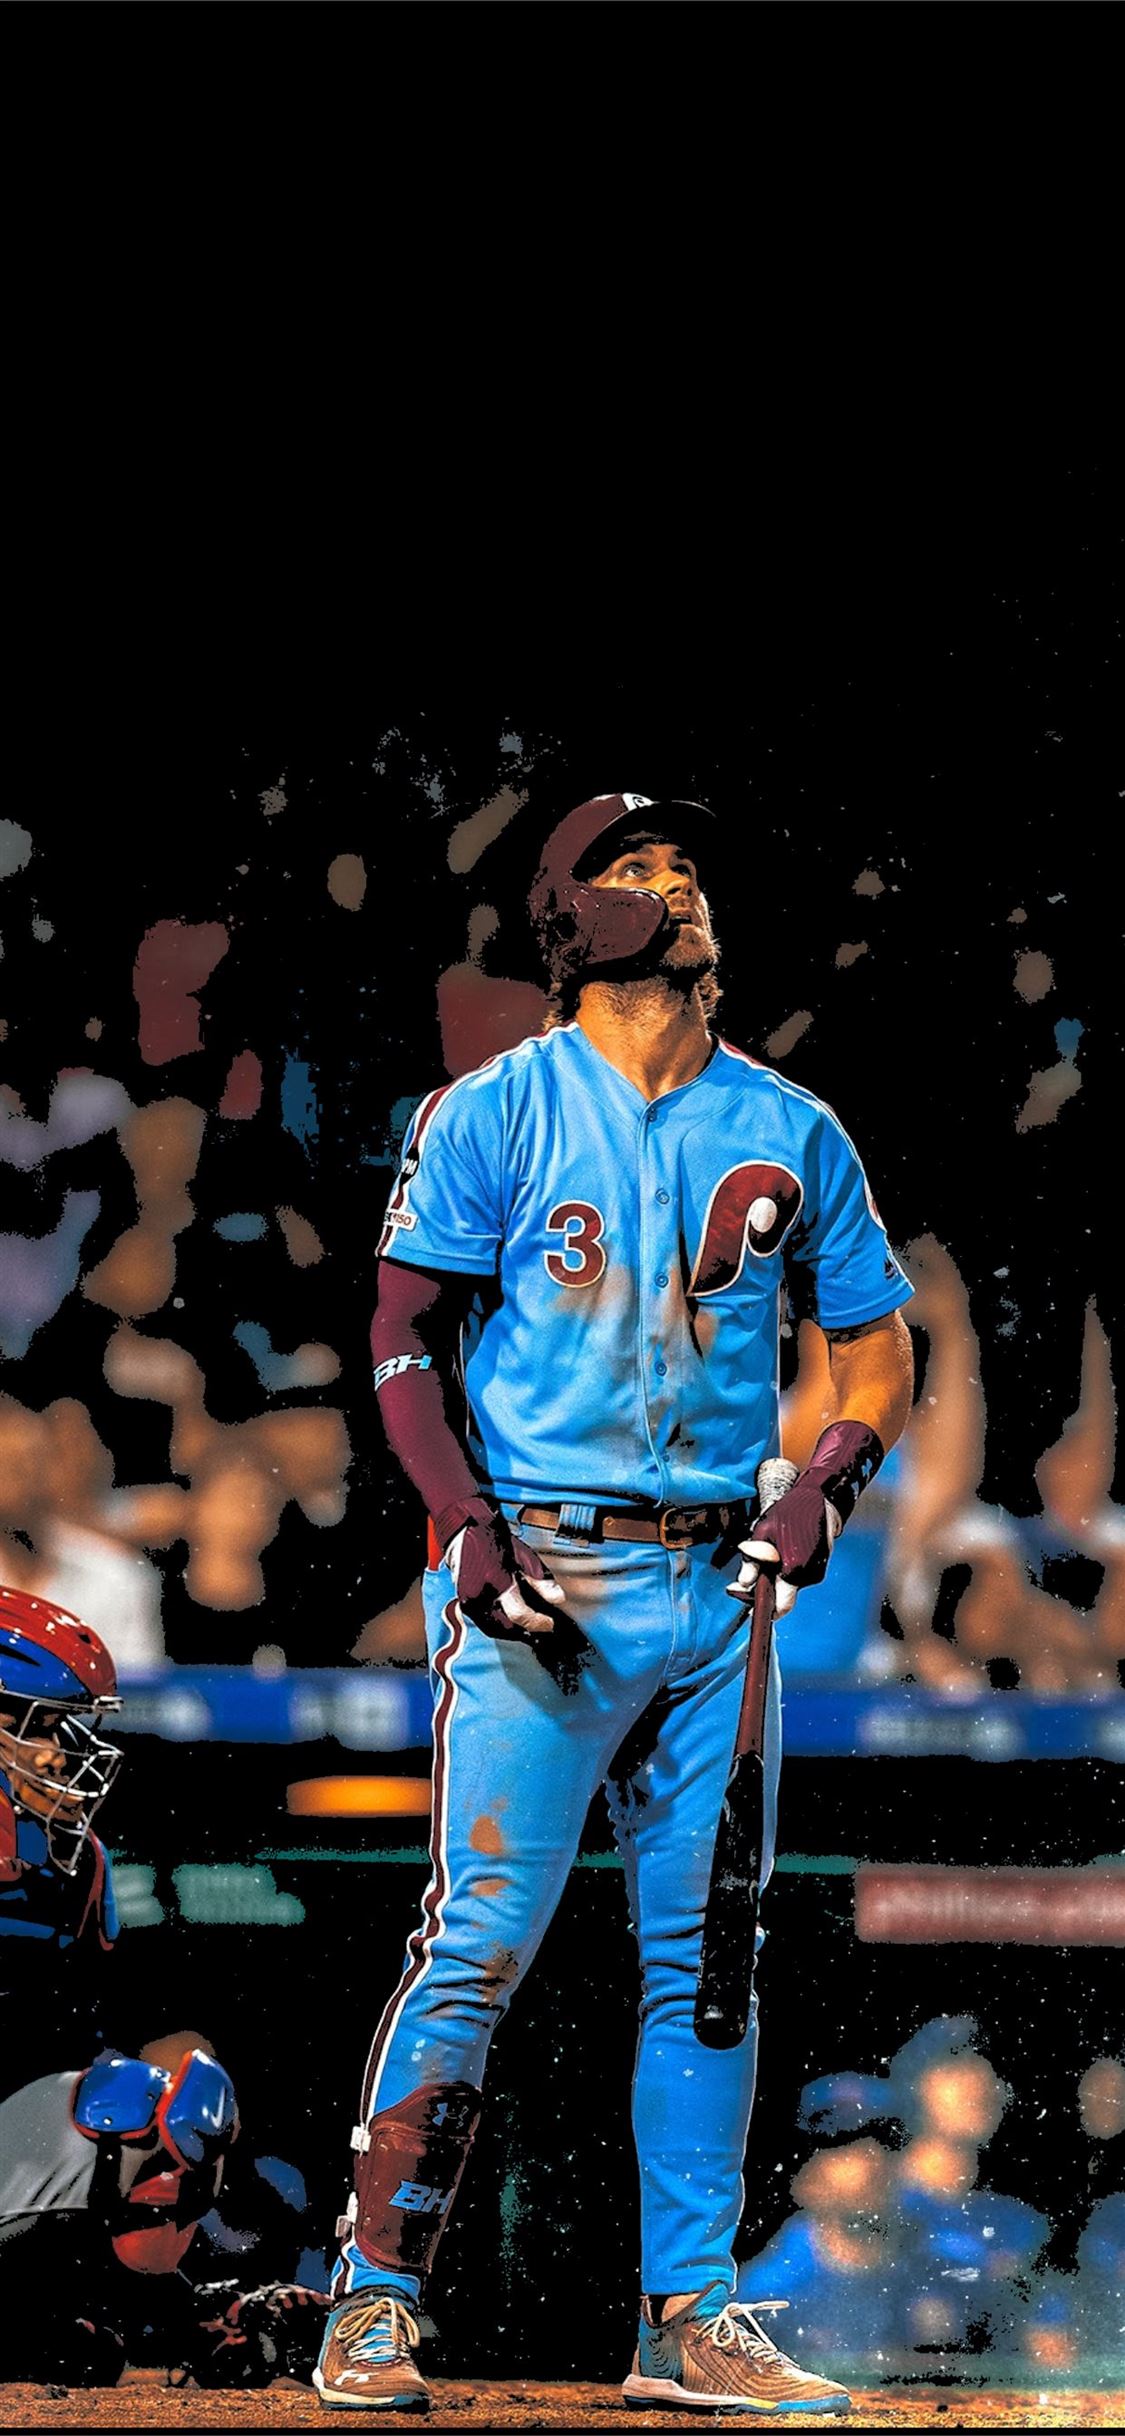 37+] Awesome Baseball iPhone Wallpapers - WallpaperSafari